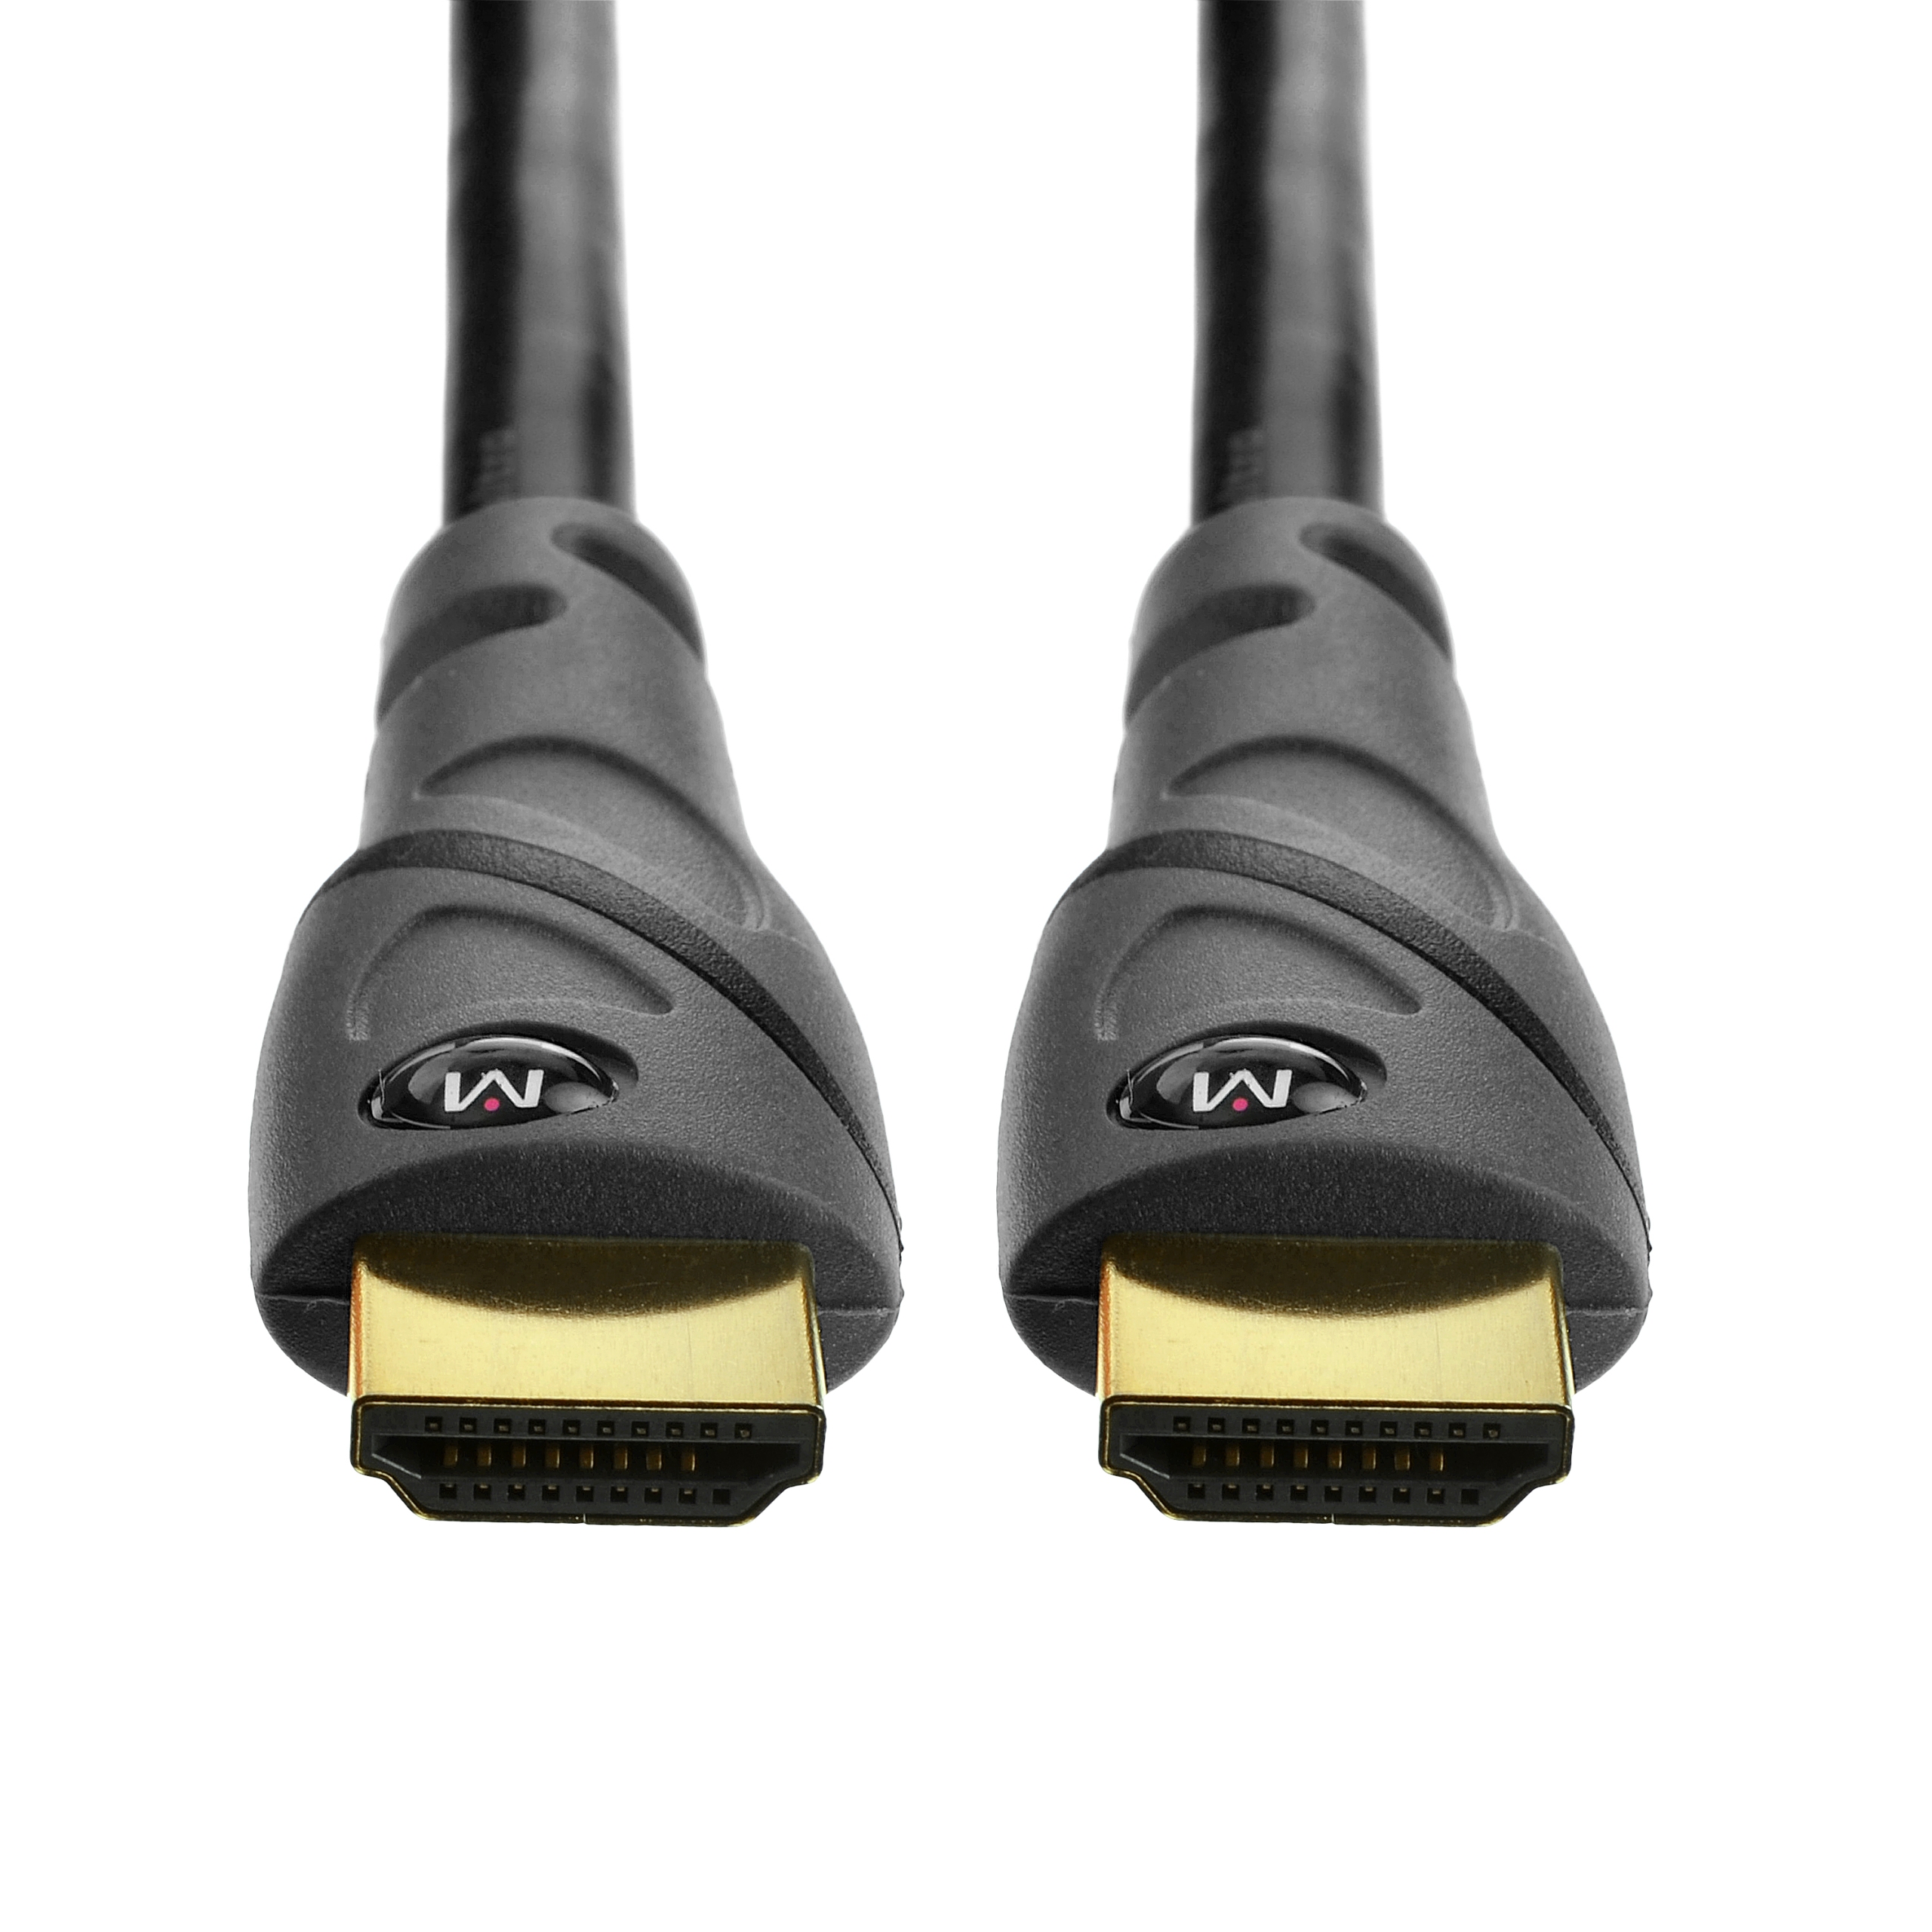 NLHDMI-AOC025, Câble HDMI NewLink 25m HDMI Mâle → HDMI Mâle